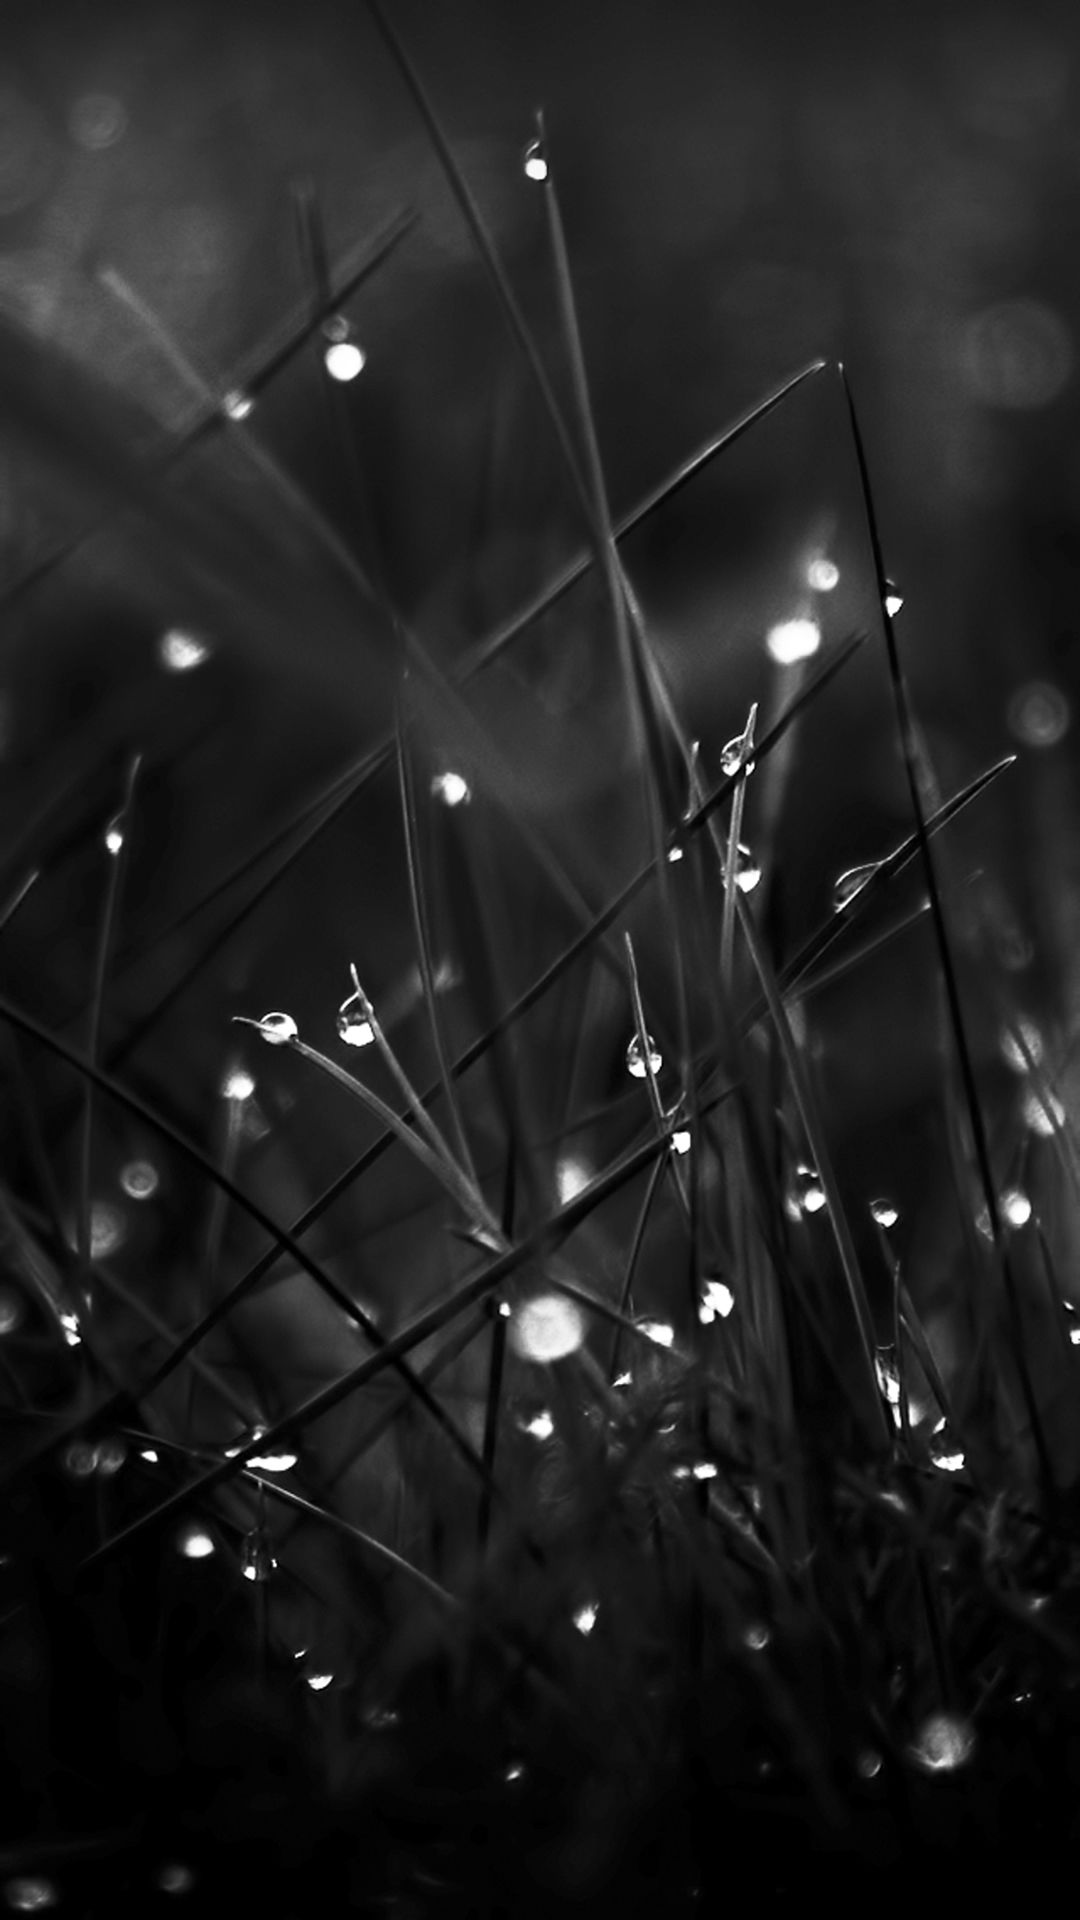 Dark Dew Morning Leafy Grass Landscape iPhone 6 Wallpaper Download